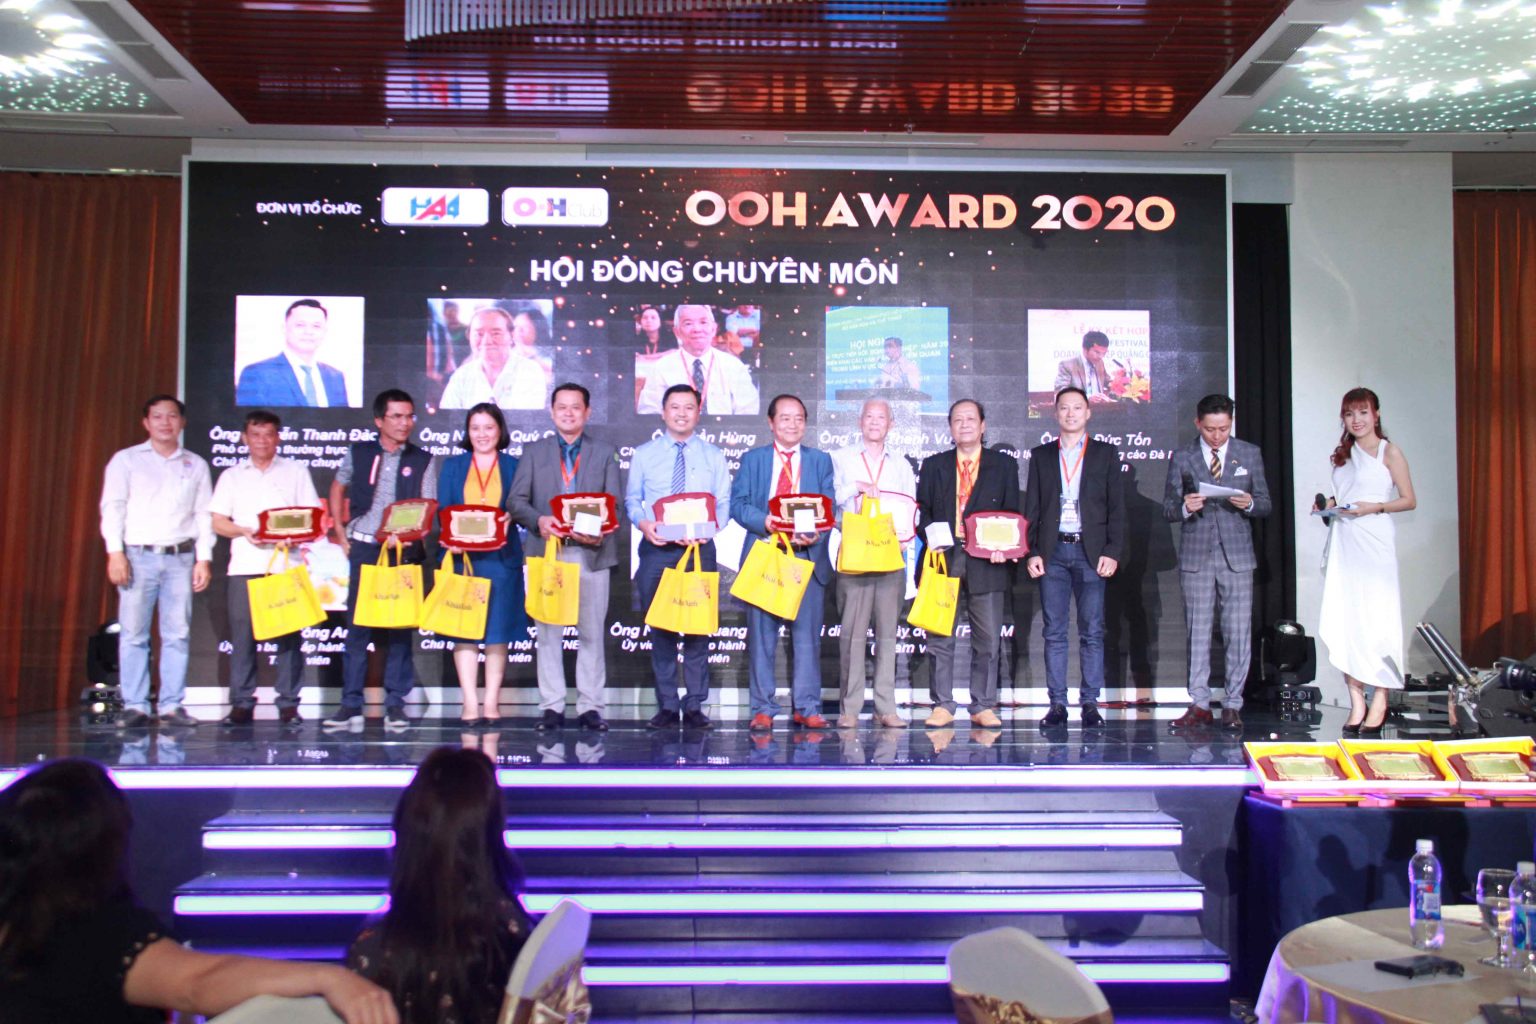 OOH-Award-2020-6-1536x1024